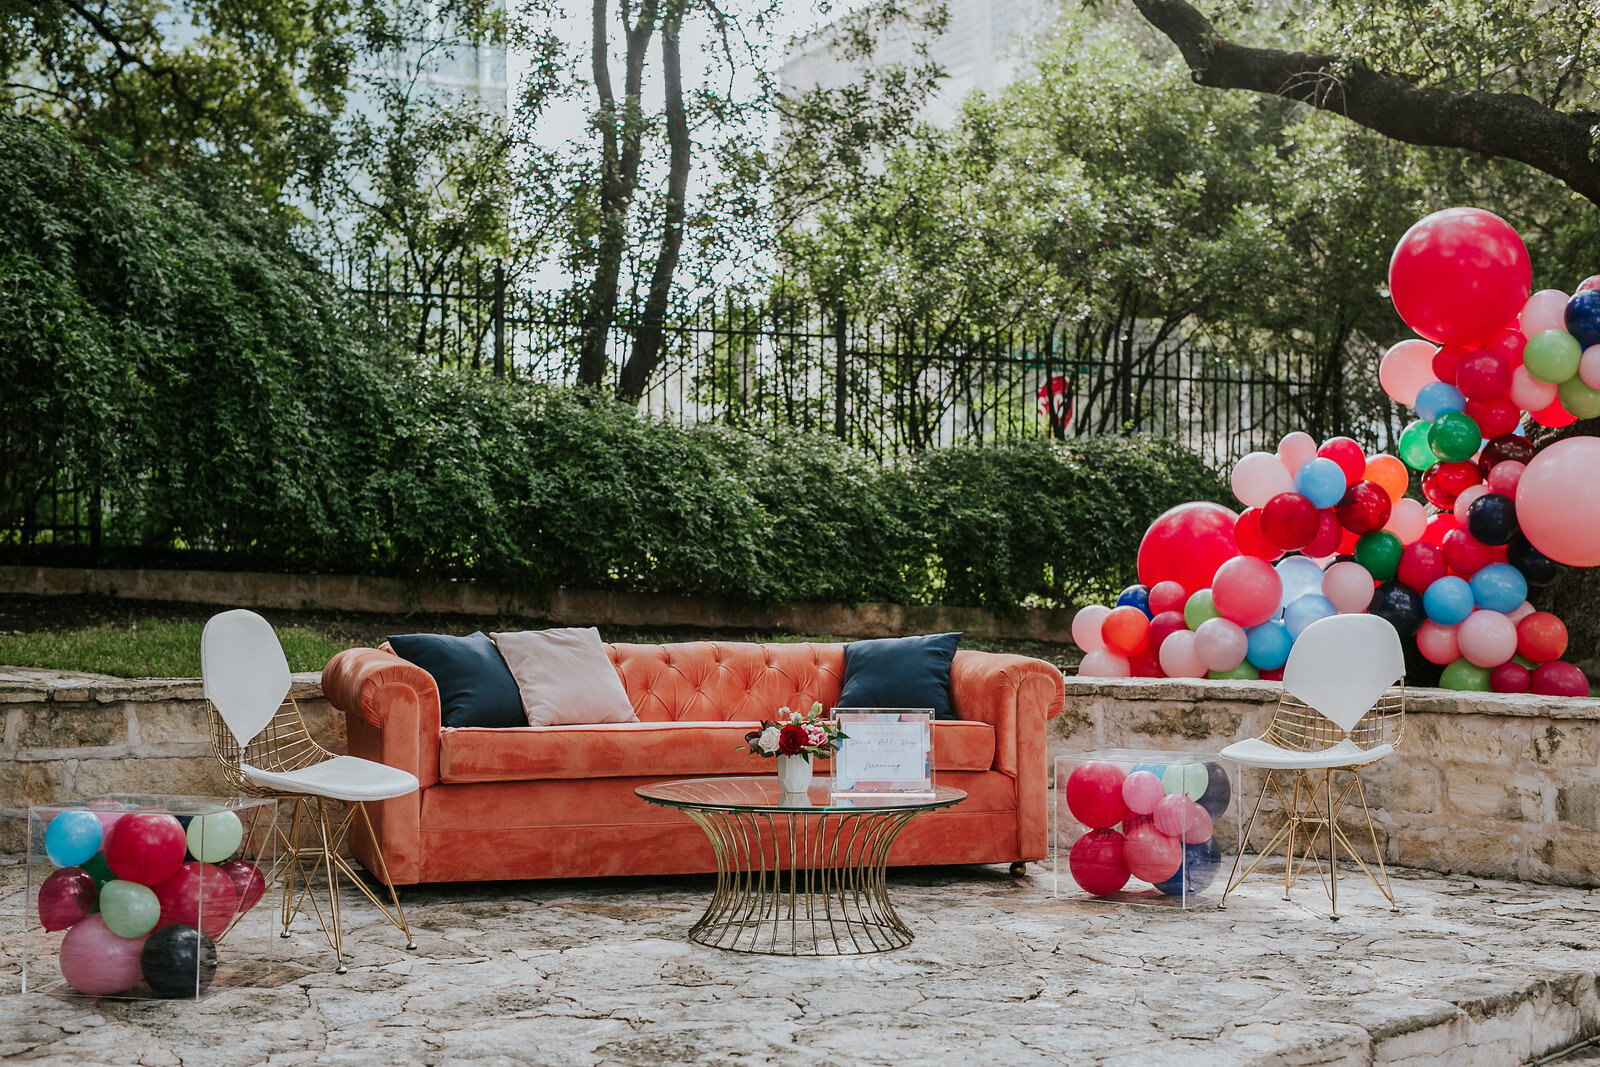 backyard birthdal balloons with pink champagne designs.jpg